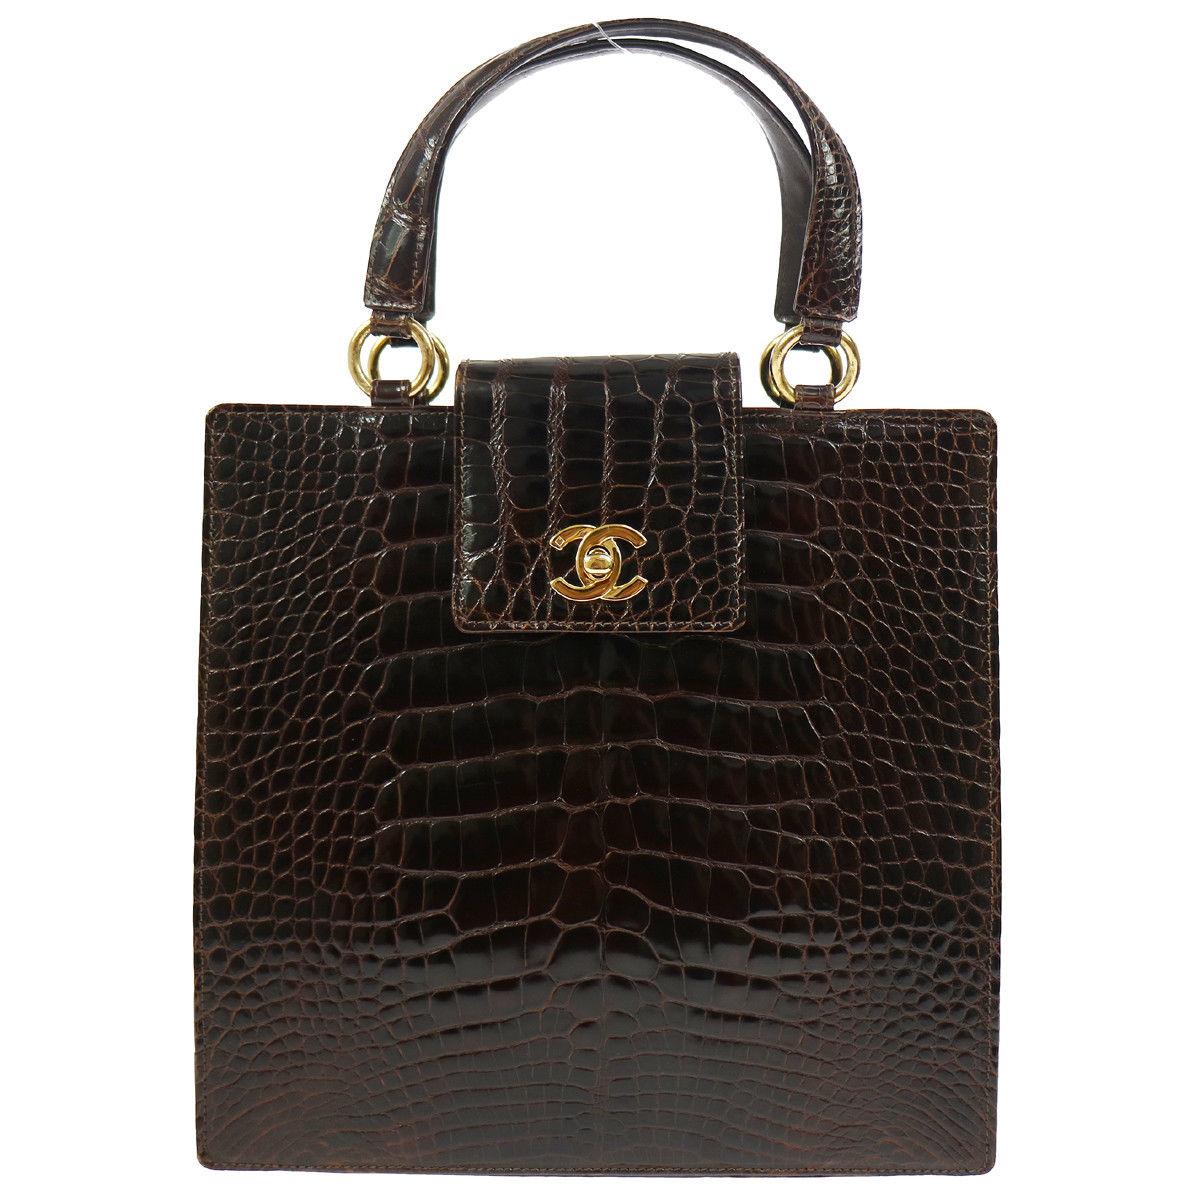 Chanel Rare Crocodile Gold Kelly StyleEvening Top Handle Satchel Bag in Box